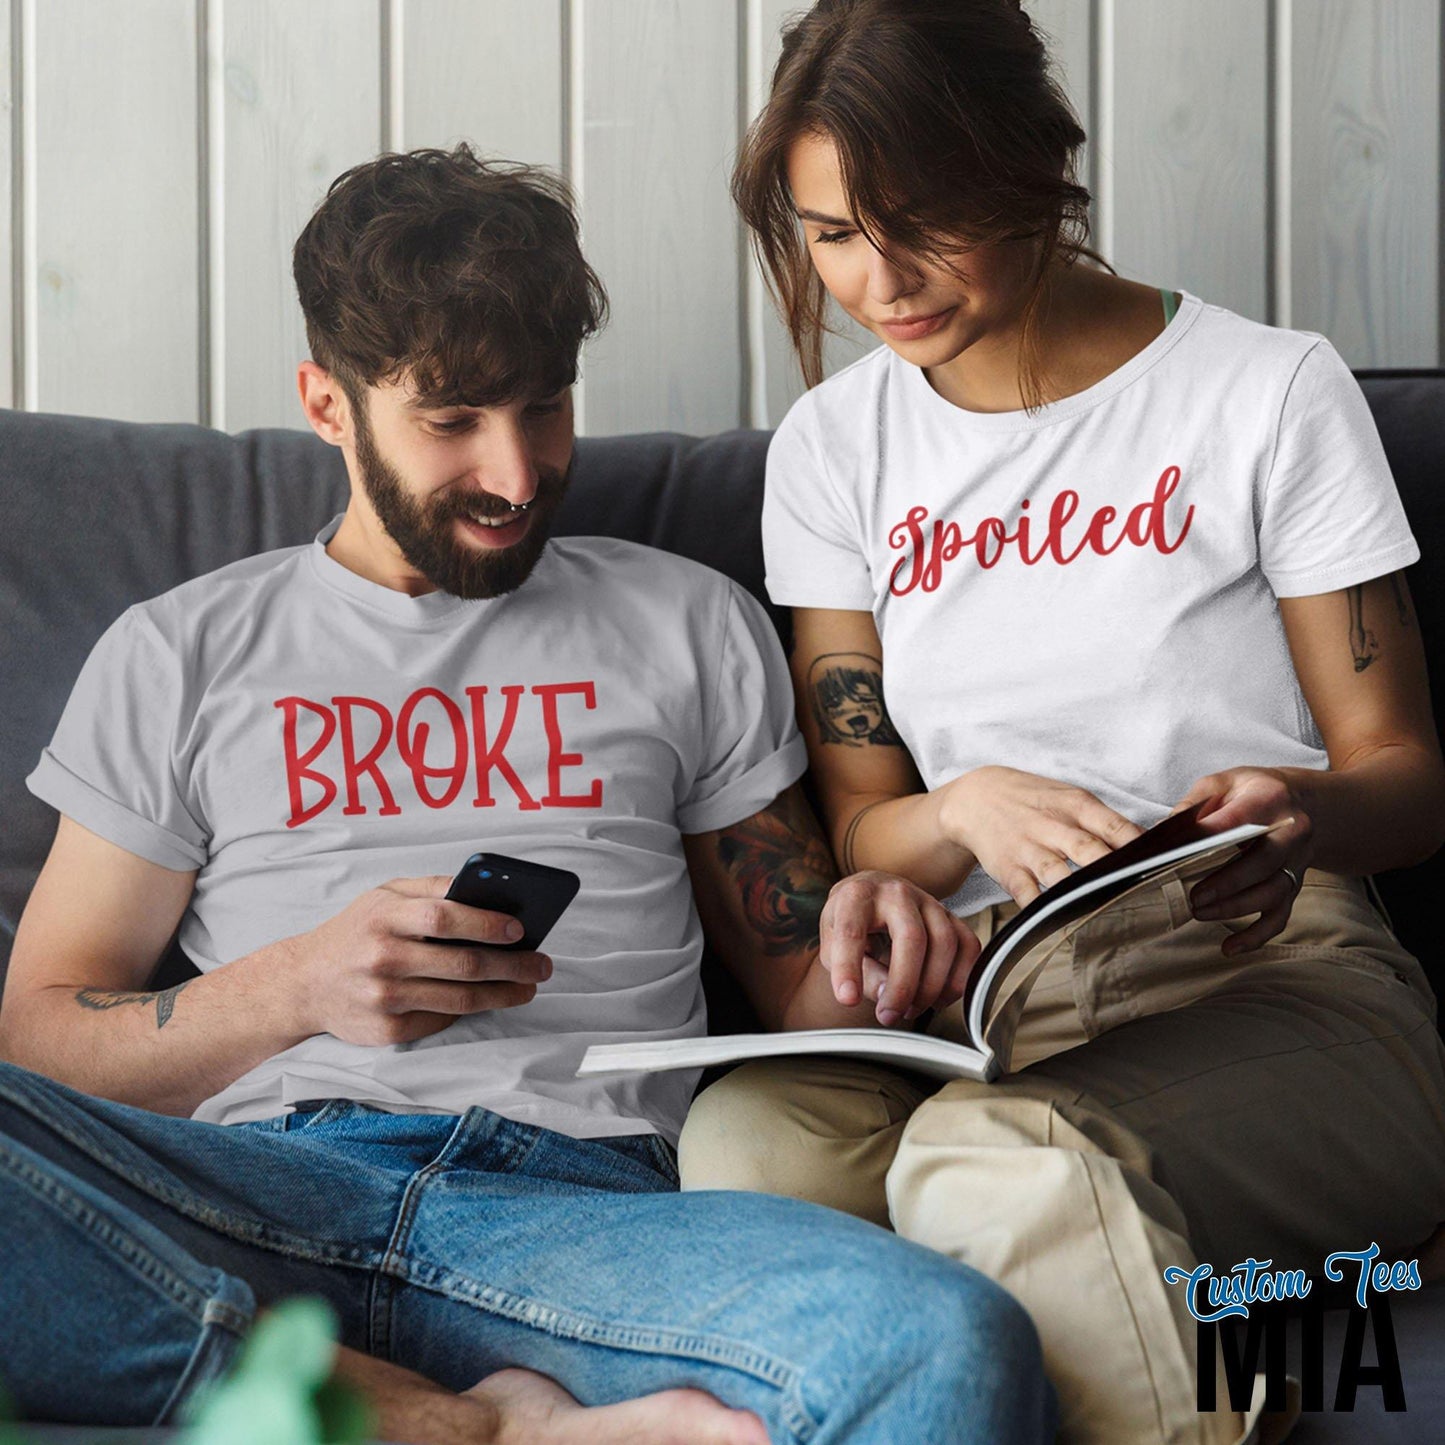 Broke and Spoiled Couples Matching Christmas Shirts - Custom Tees MIA